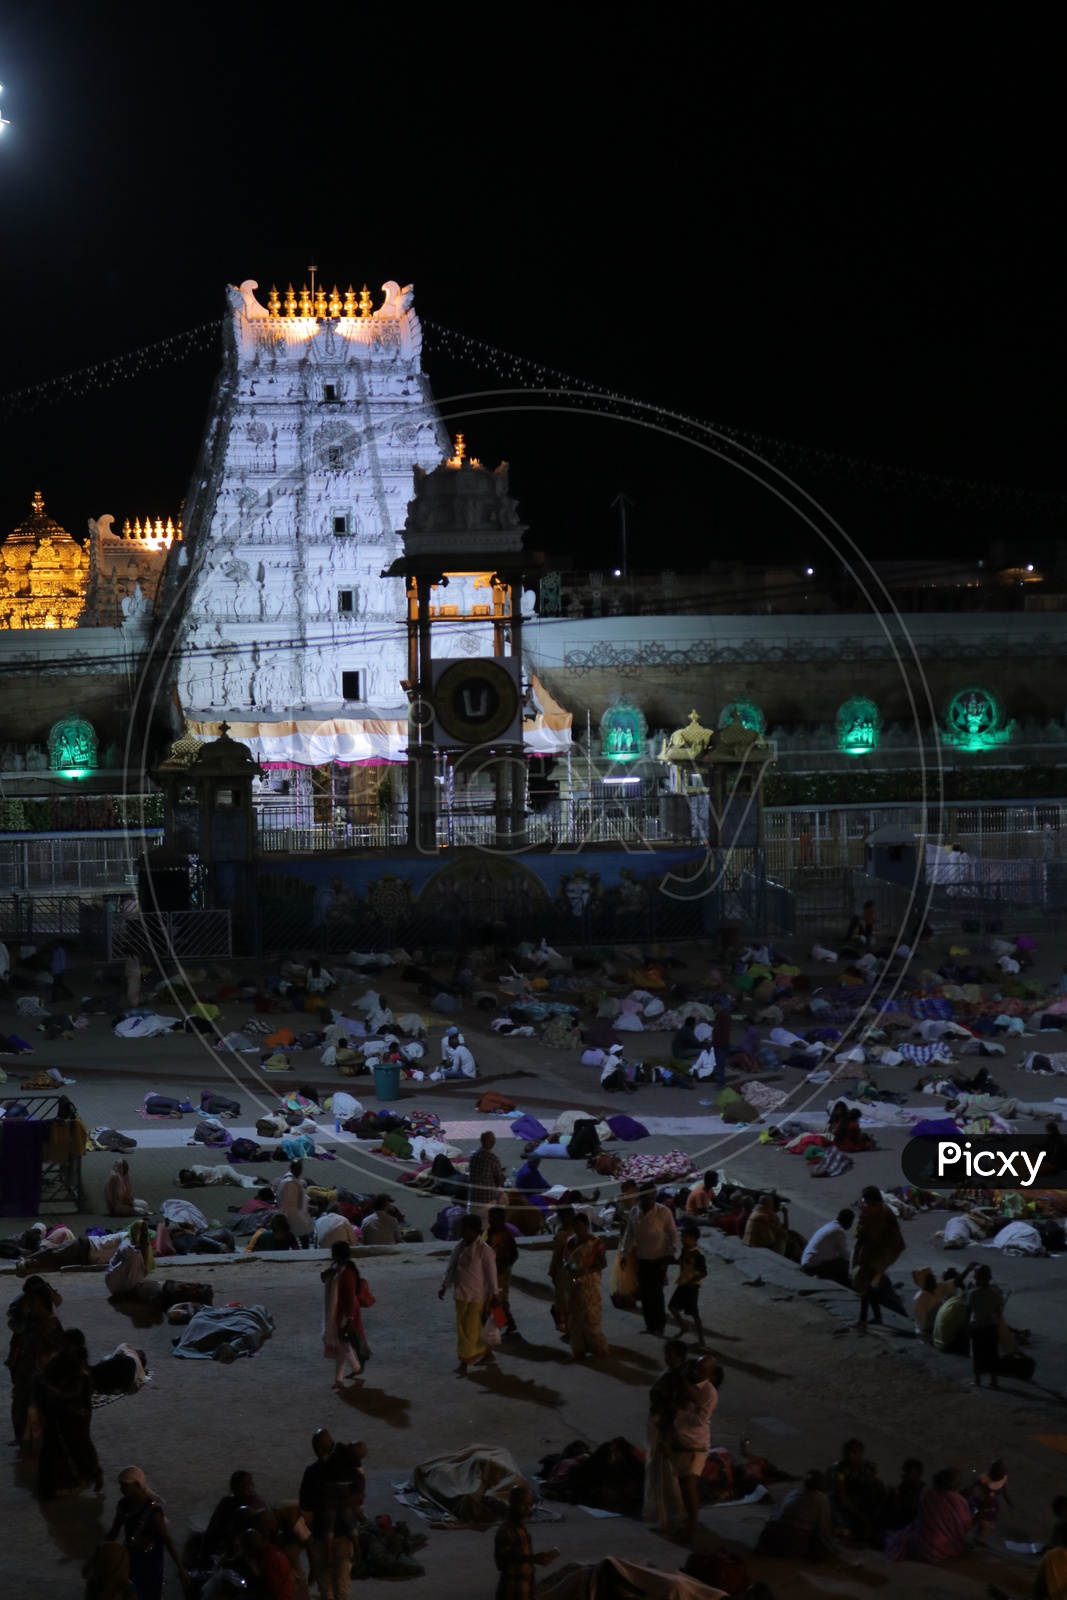 Gopuram of Tirumala with people sleeping overnight in foreground